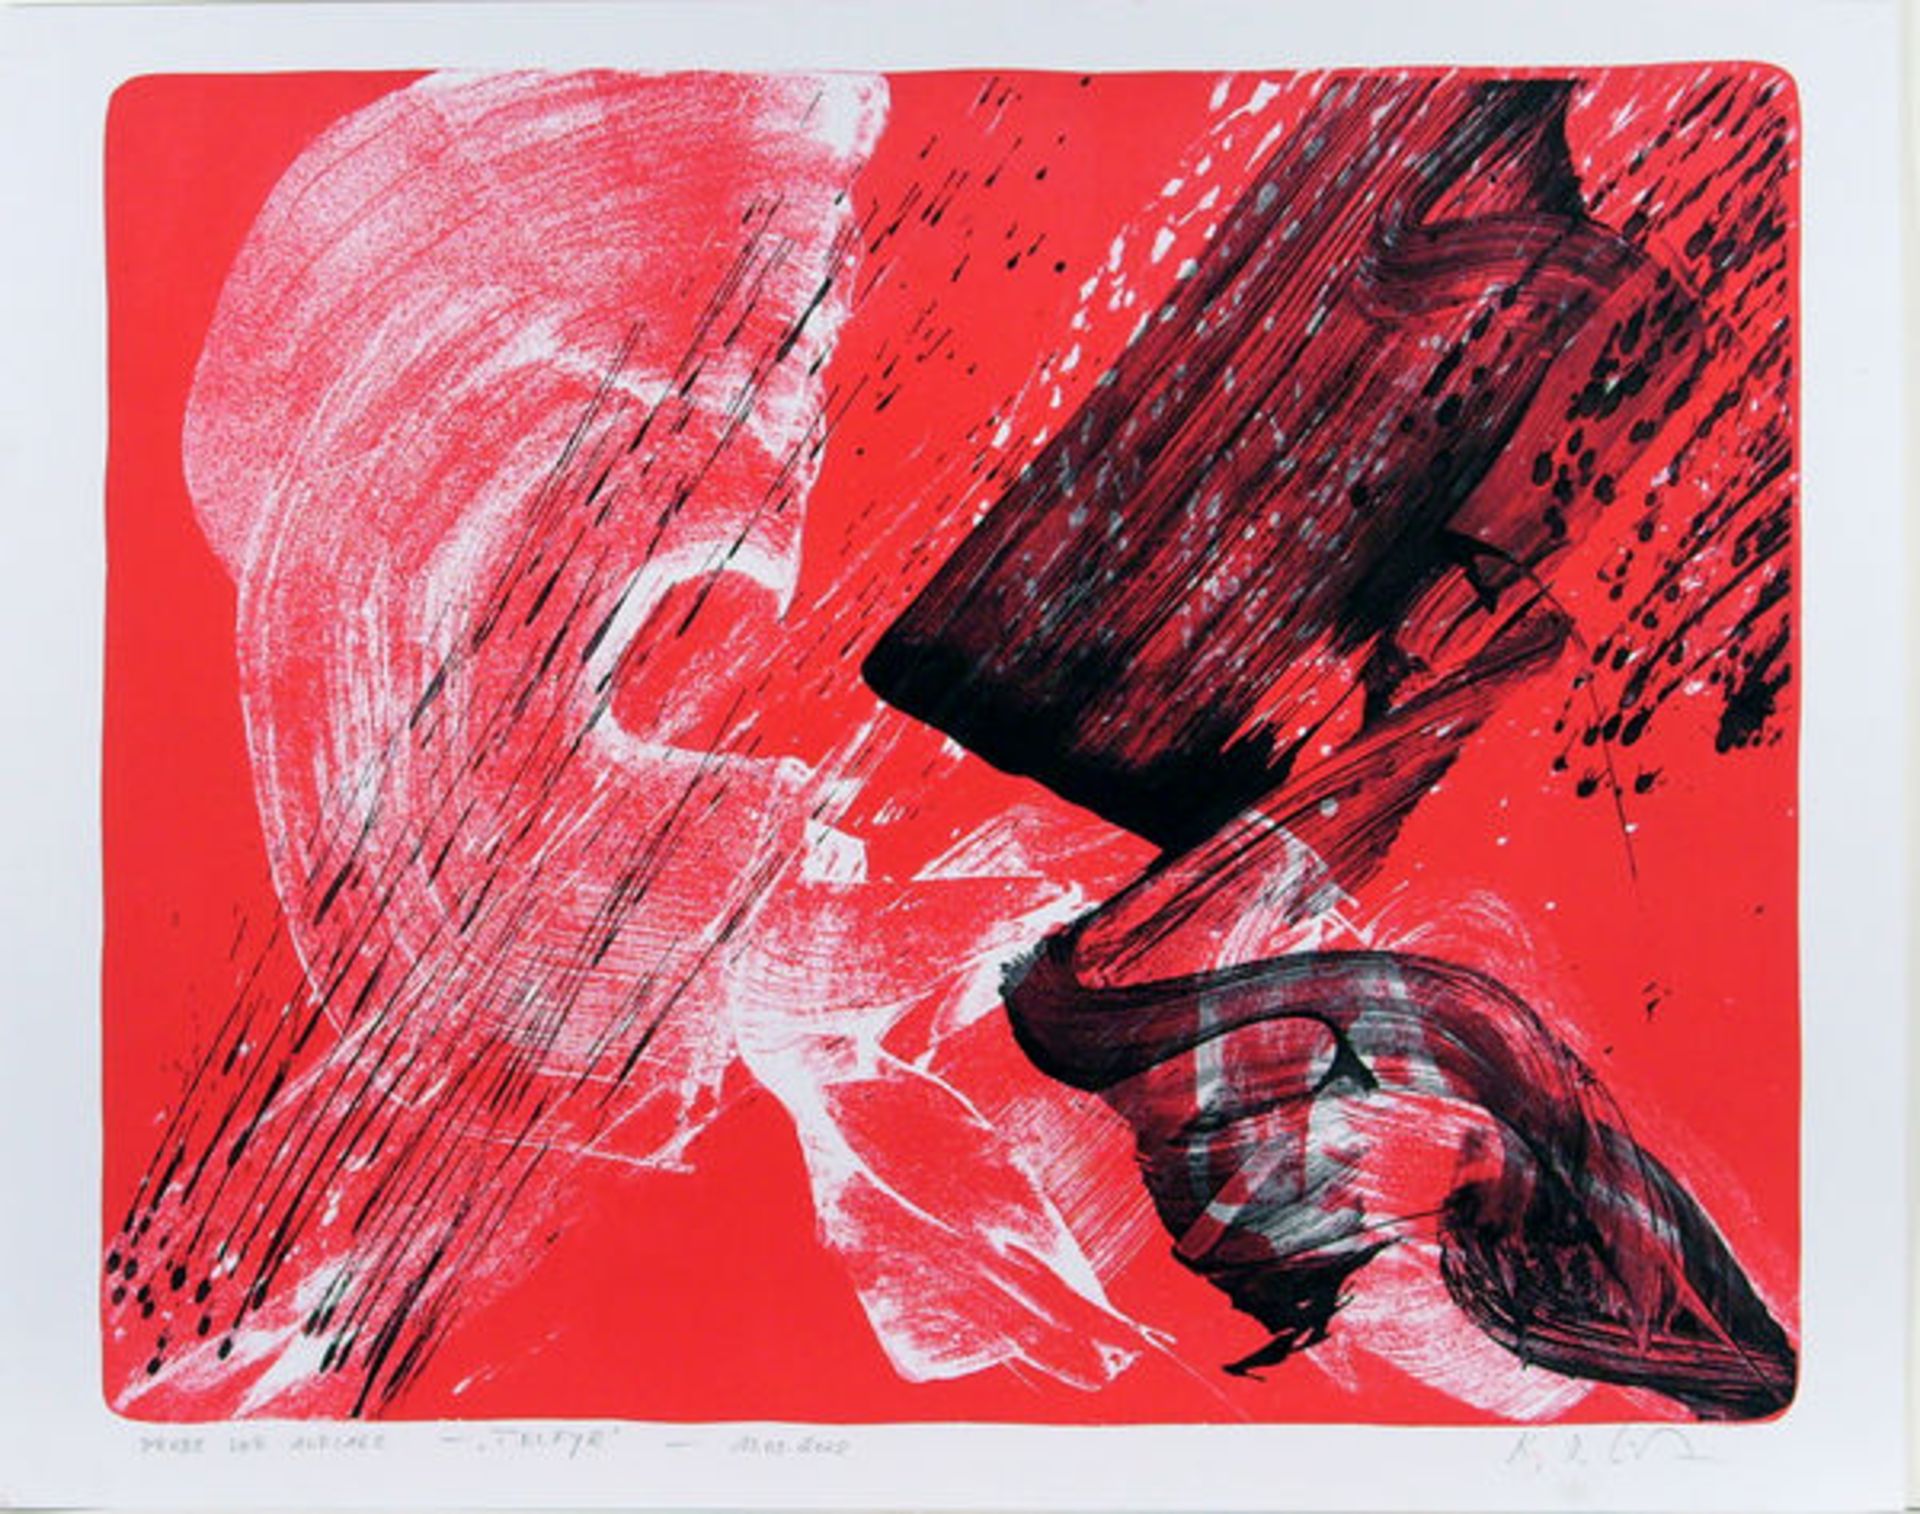 Götz, Karl Otto Farblithographie auf glattem Karton, 63,5 x 80 cm Telfyr (2002) Hügelow 207.